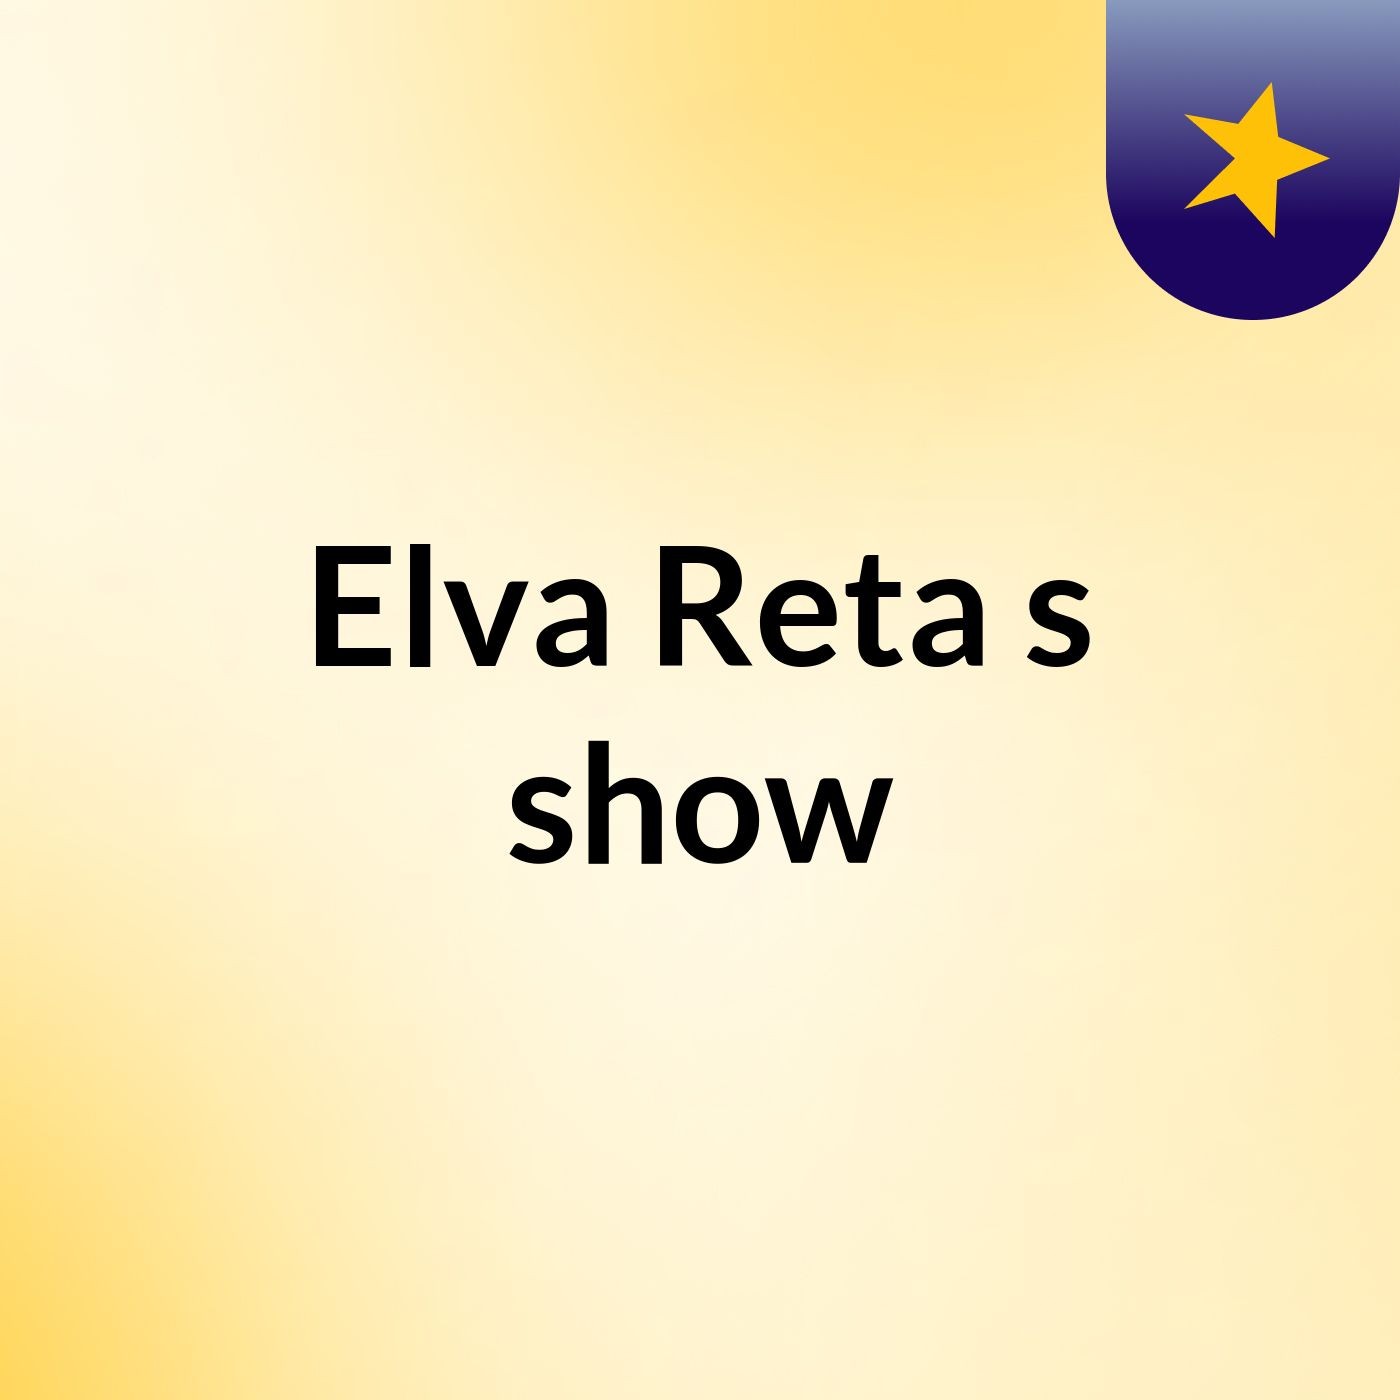 Elva Reta's show